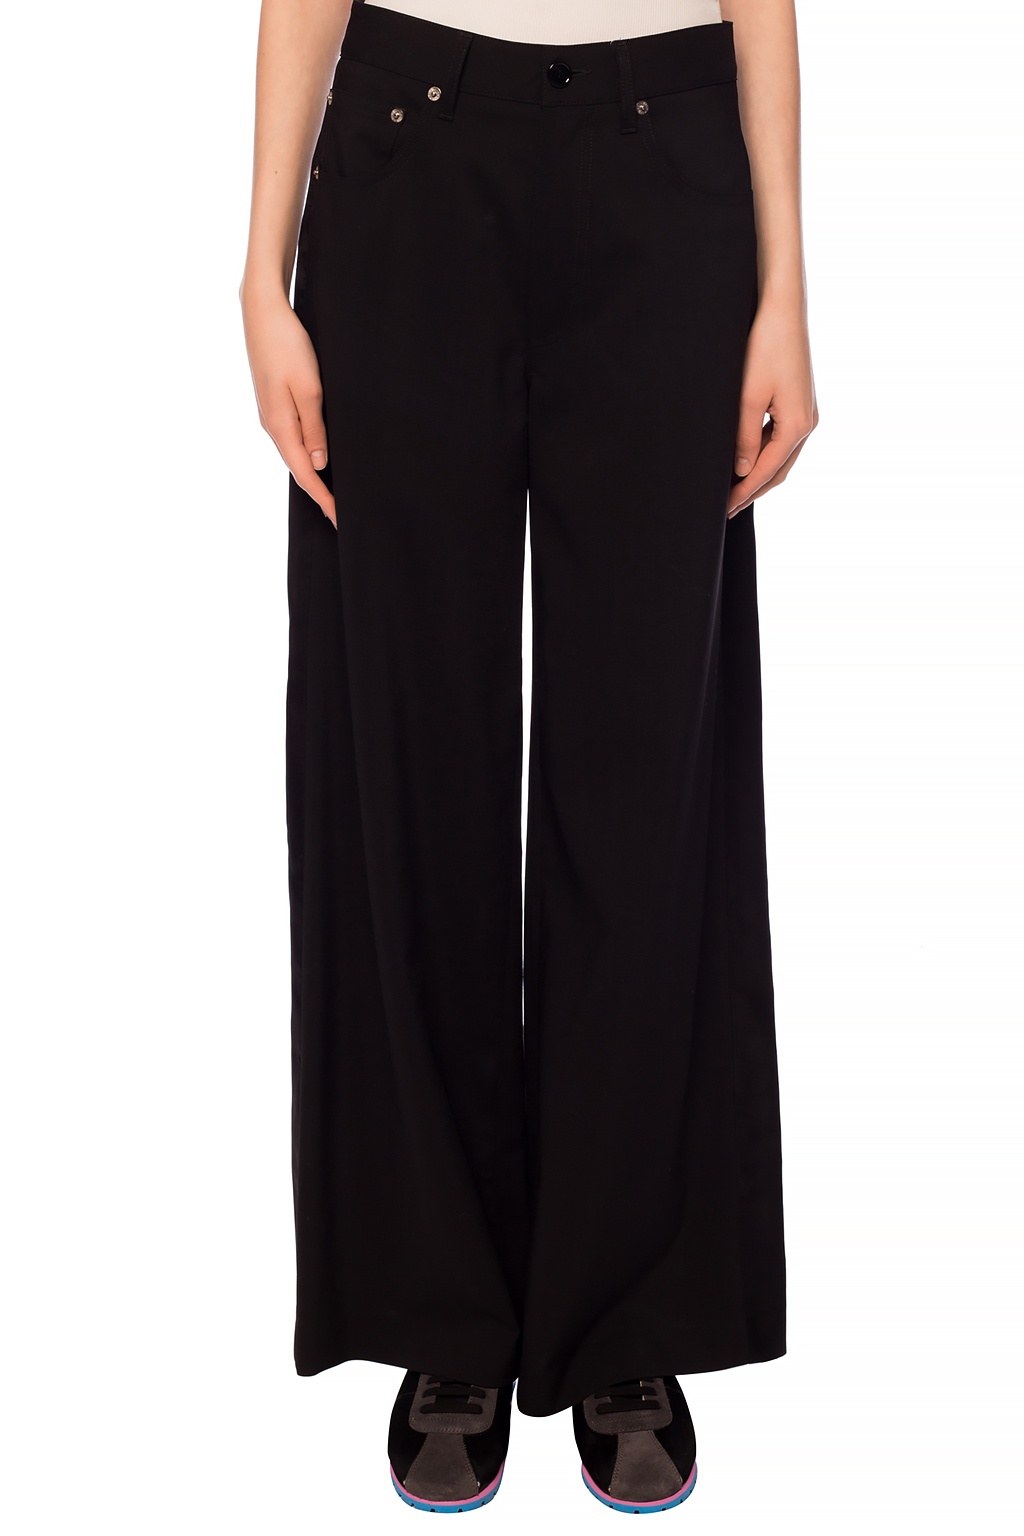 Maison Margiela MM6 Women's Black Wool Elastic Waist Casual Pants